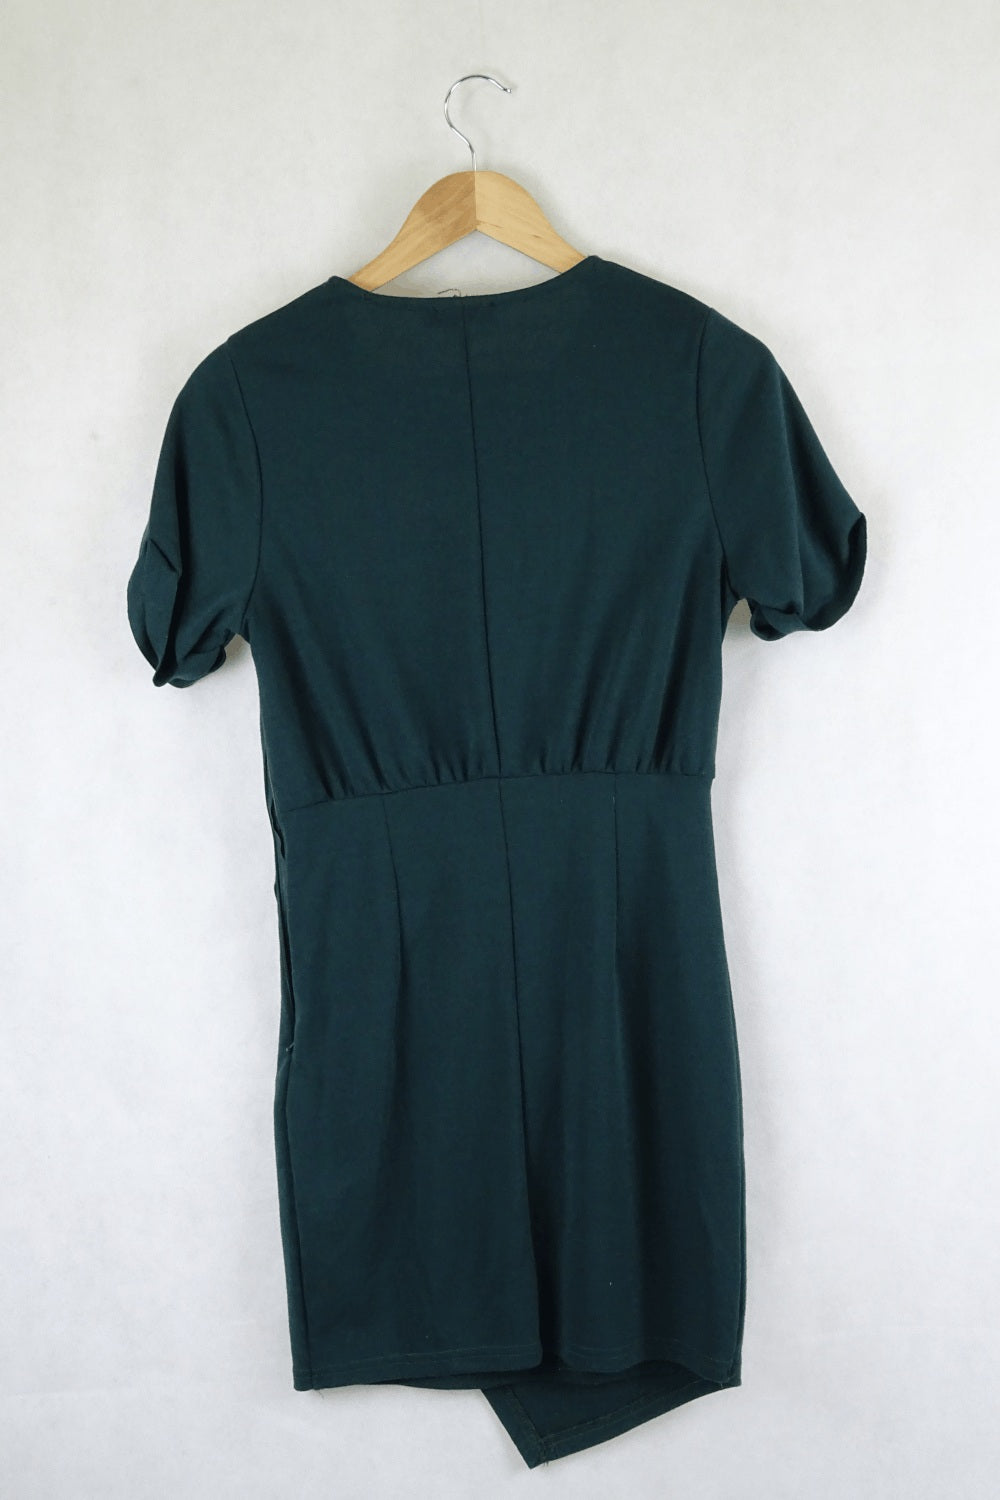 Zalora Green Dress S